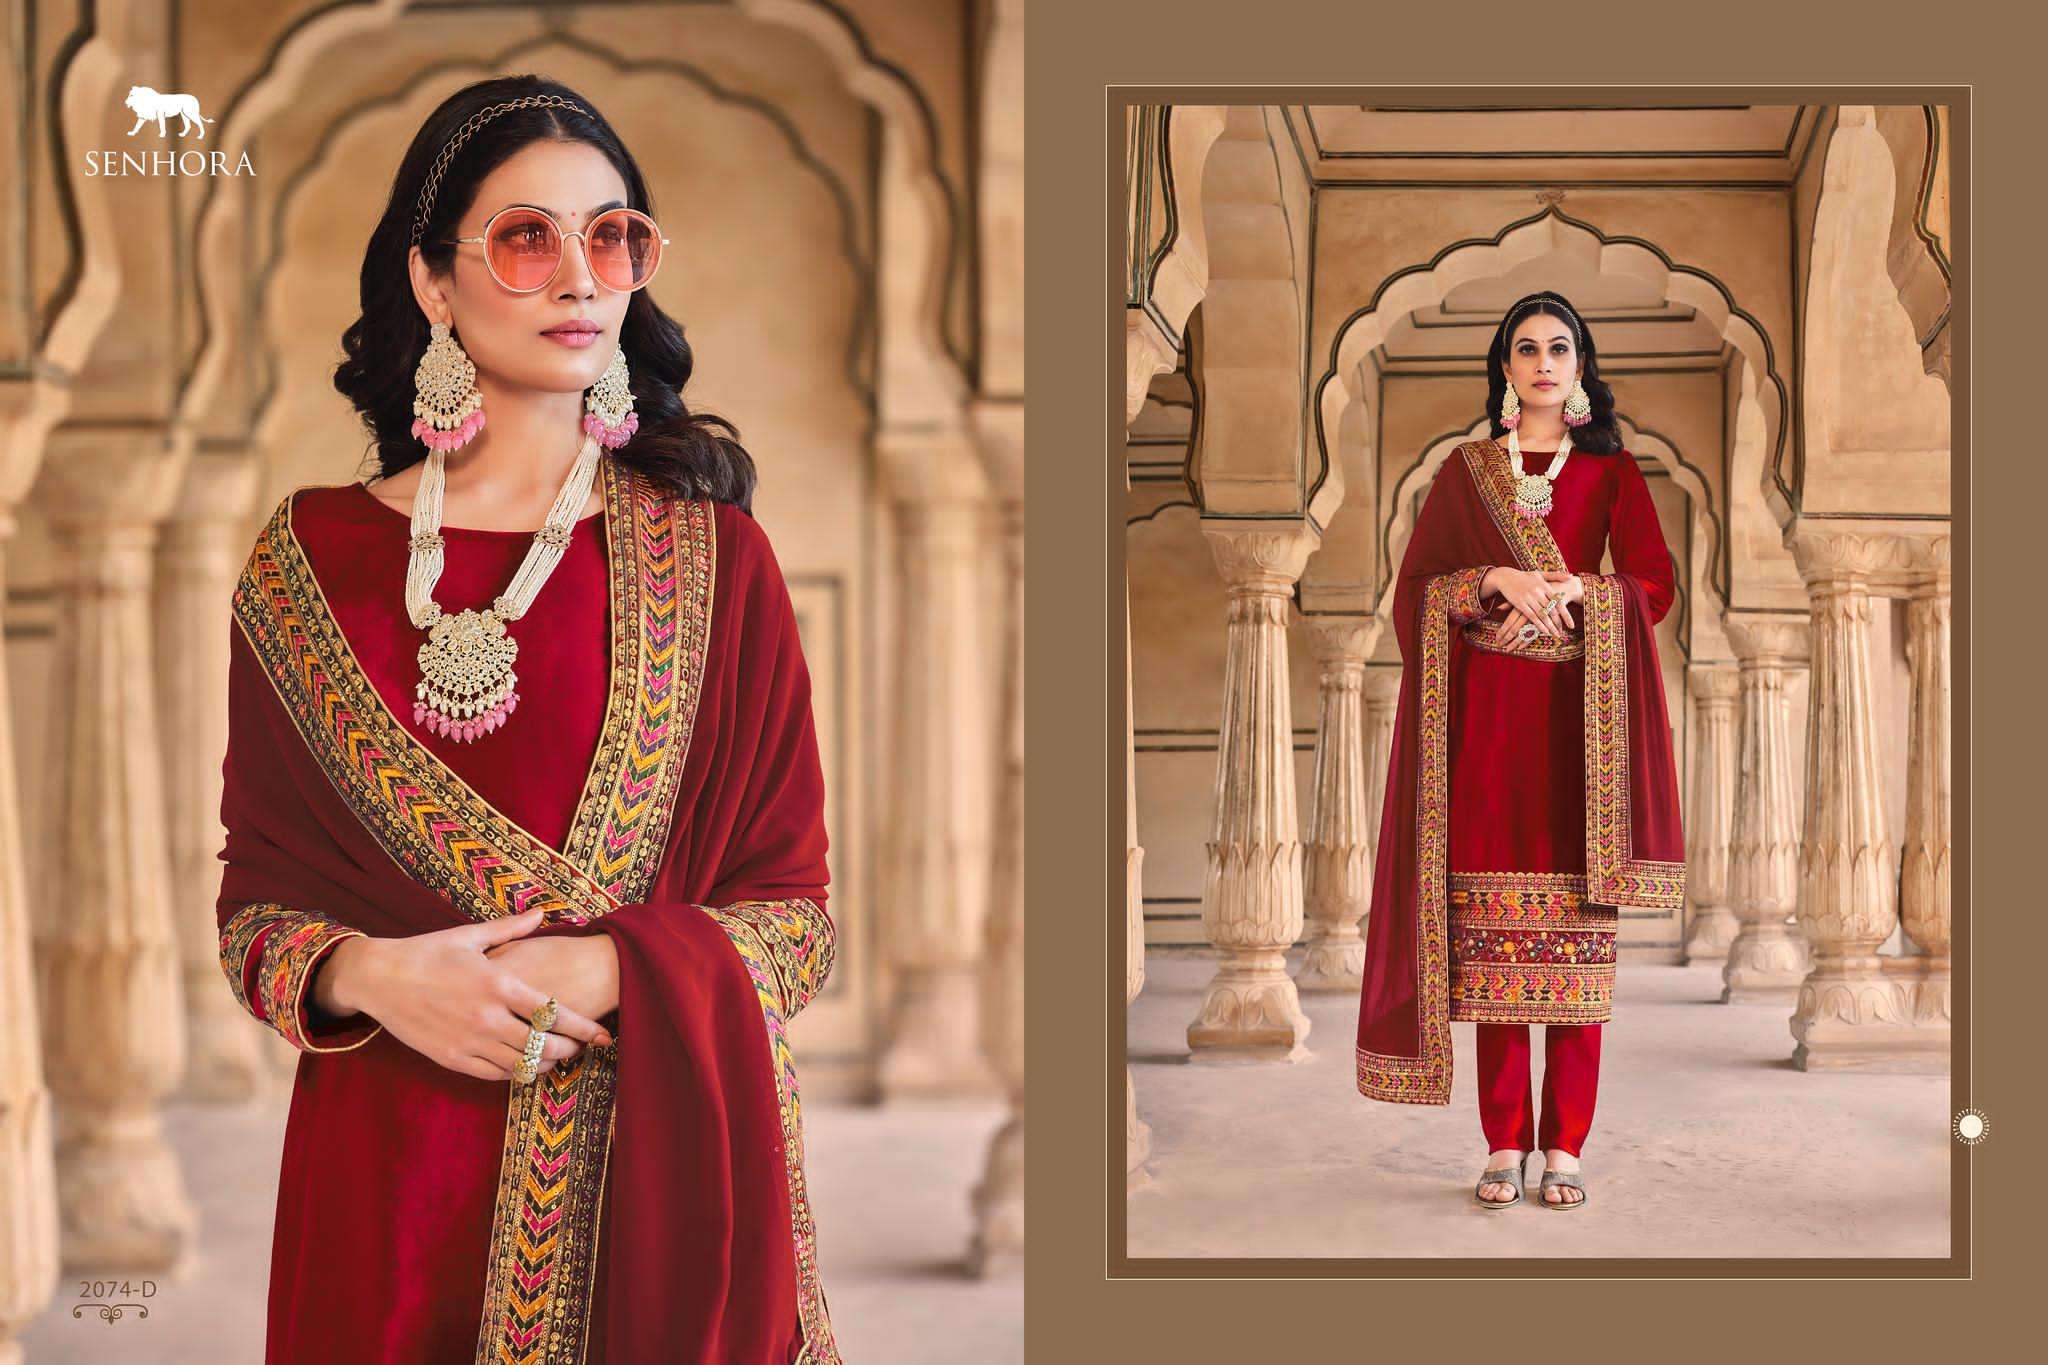 senhora aadhya vol-2 2074 colour series latest wedding wear salwar kameez wholesaler surat gujarat